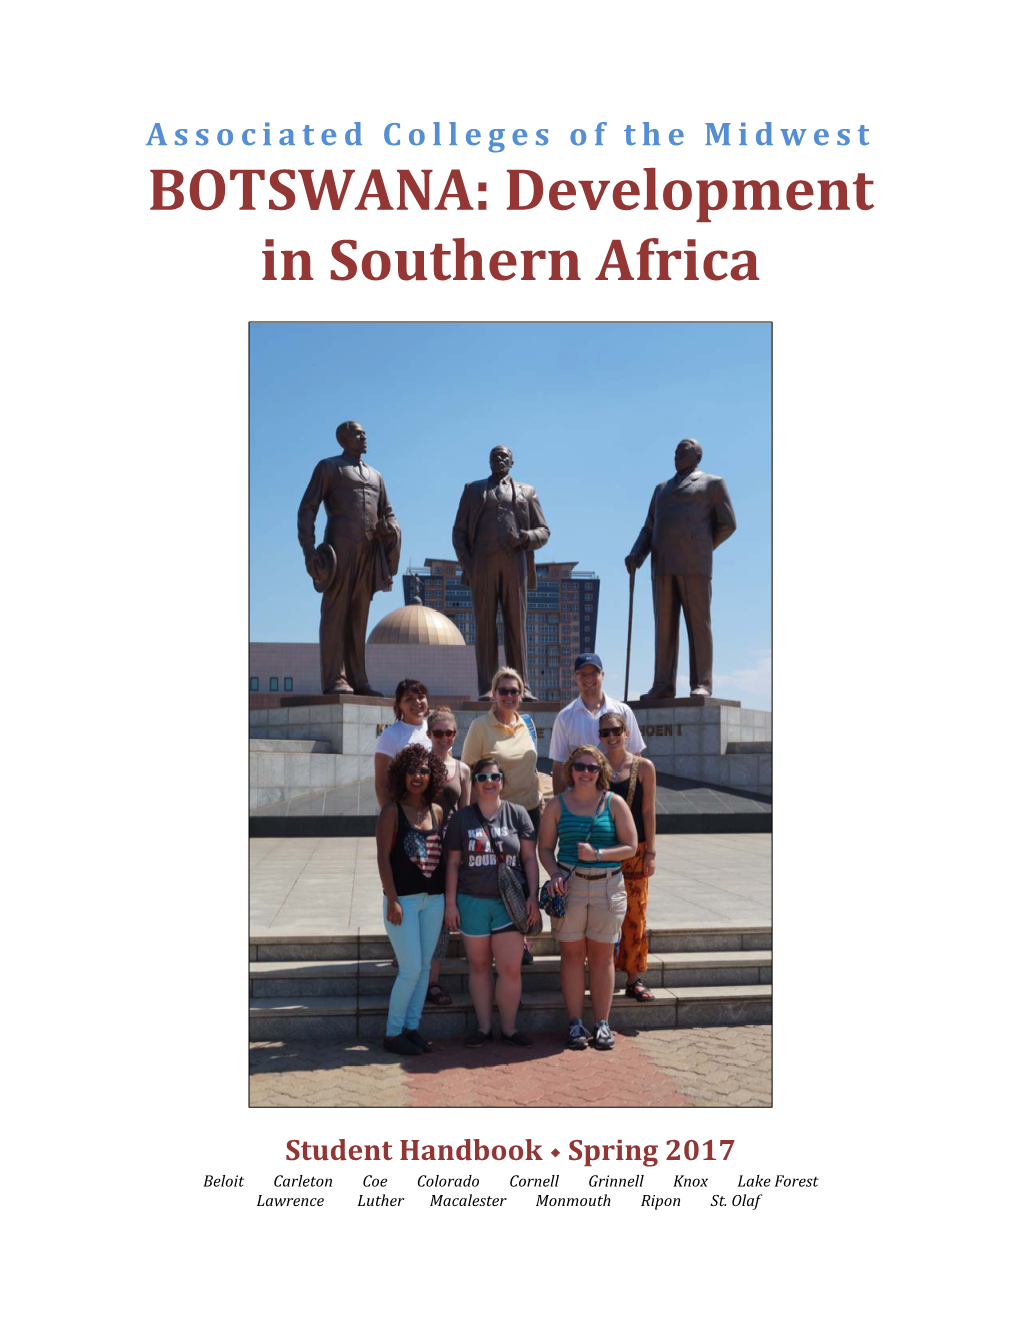 BOTSWANA: Development in Southern Africa